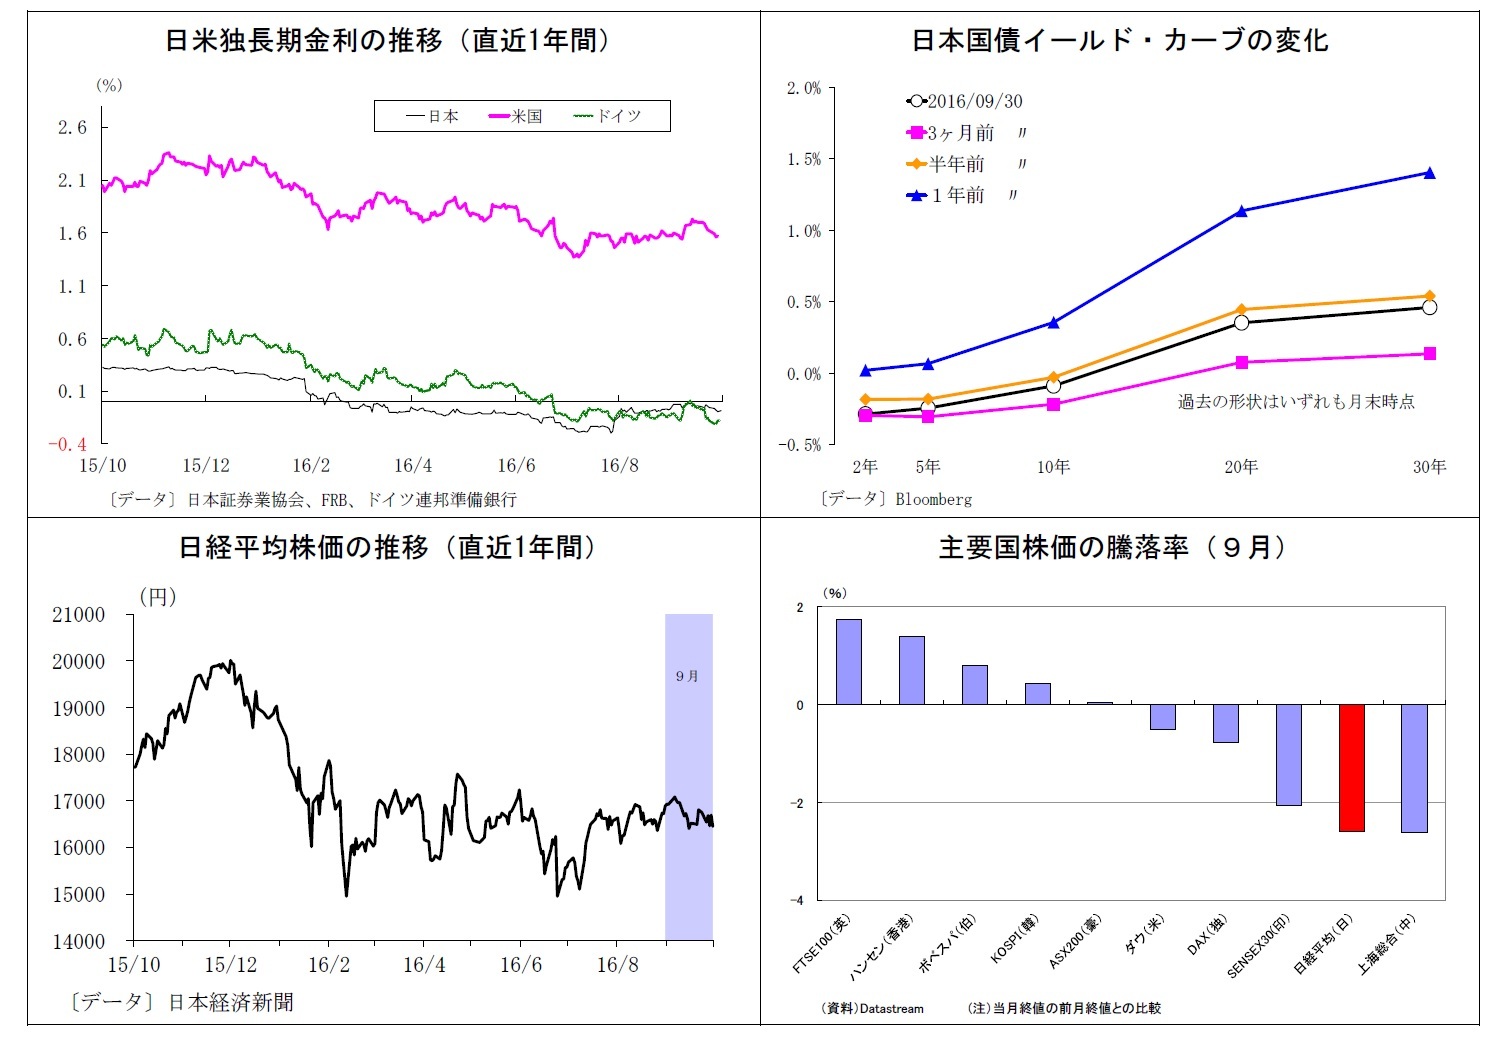 日米独長期金利の推移（直近1年間）/日本国債イールド・カーブの変化/日経平均株価の推移（直近1年間）/主要国株価の騰落率（９月）